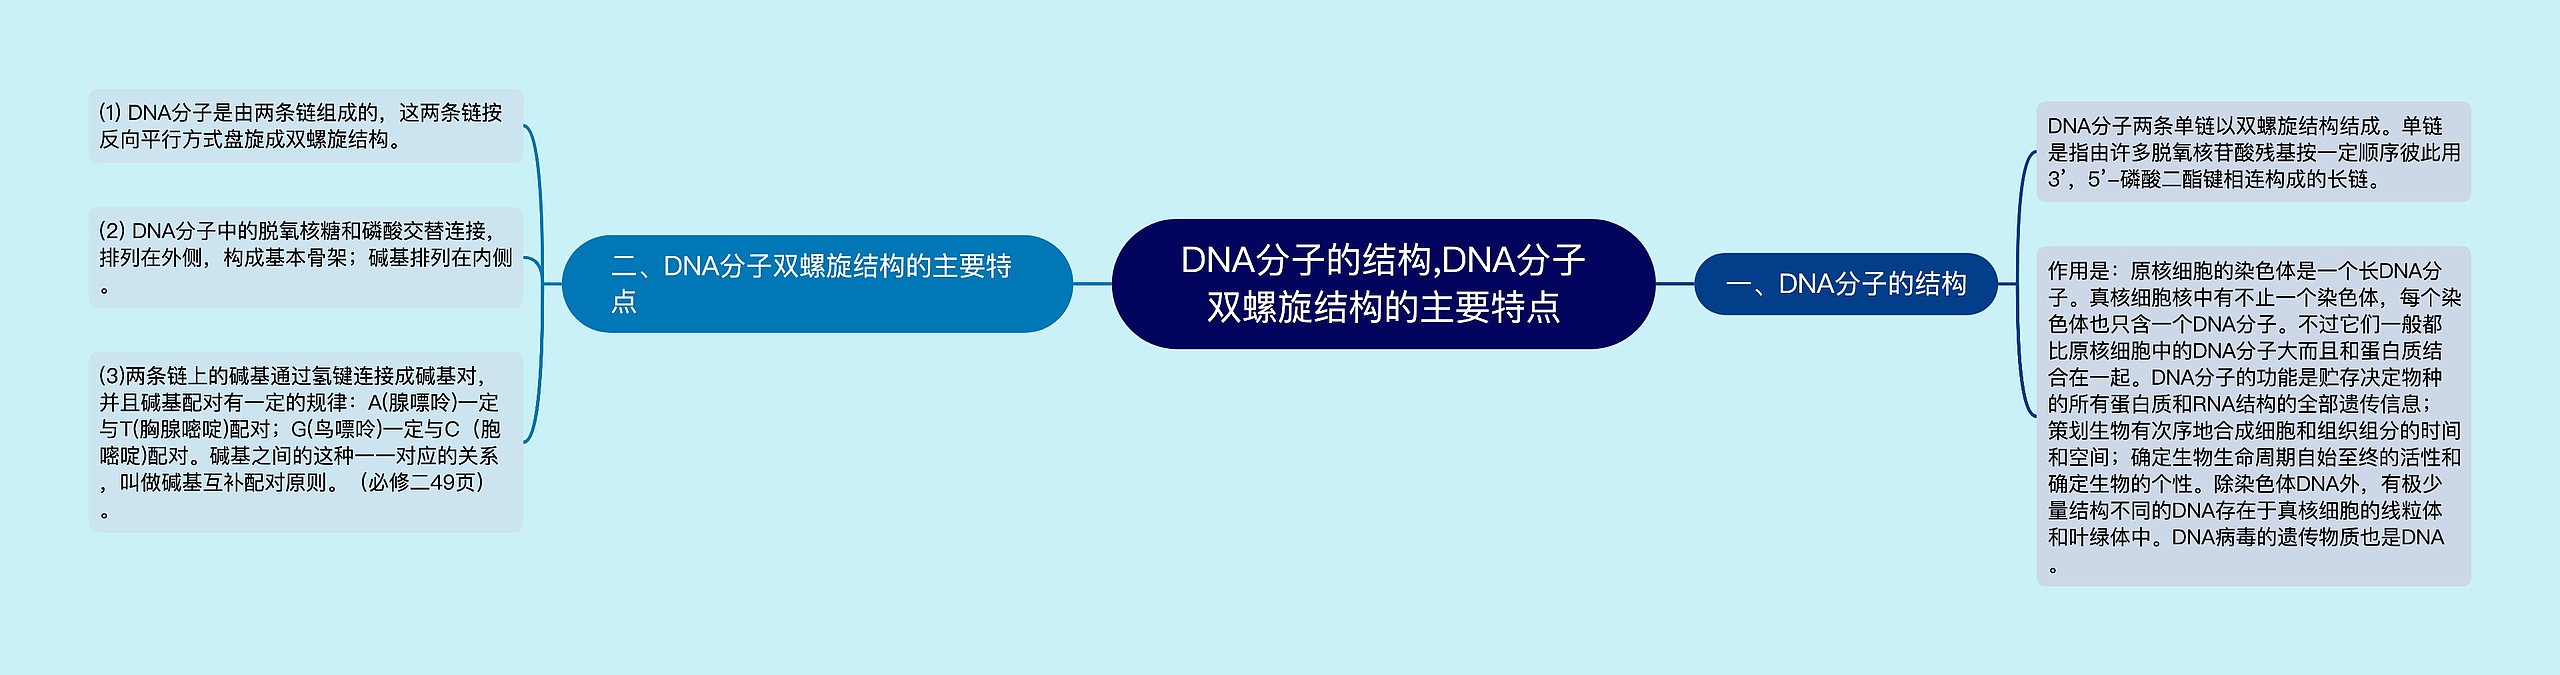 DNA分子的结构,DNA分子双螺旋结构的主要特点